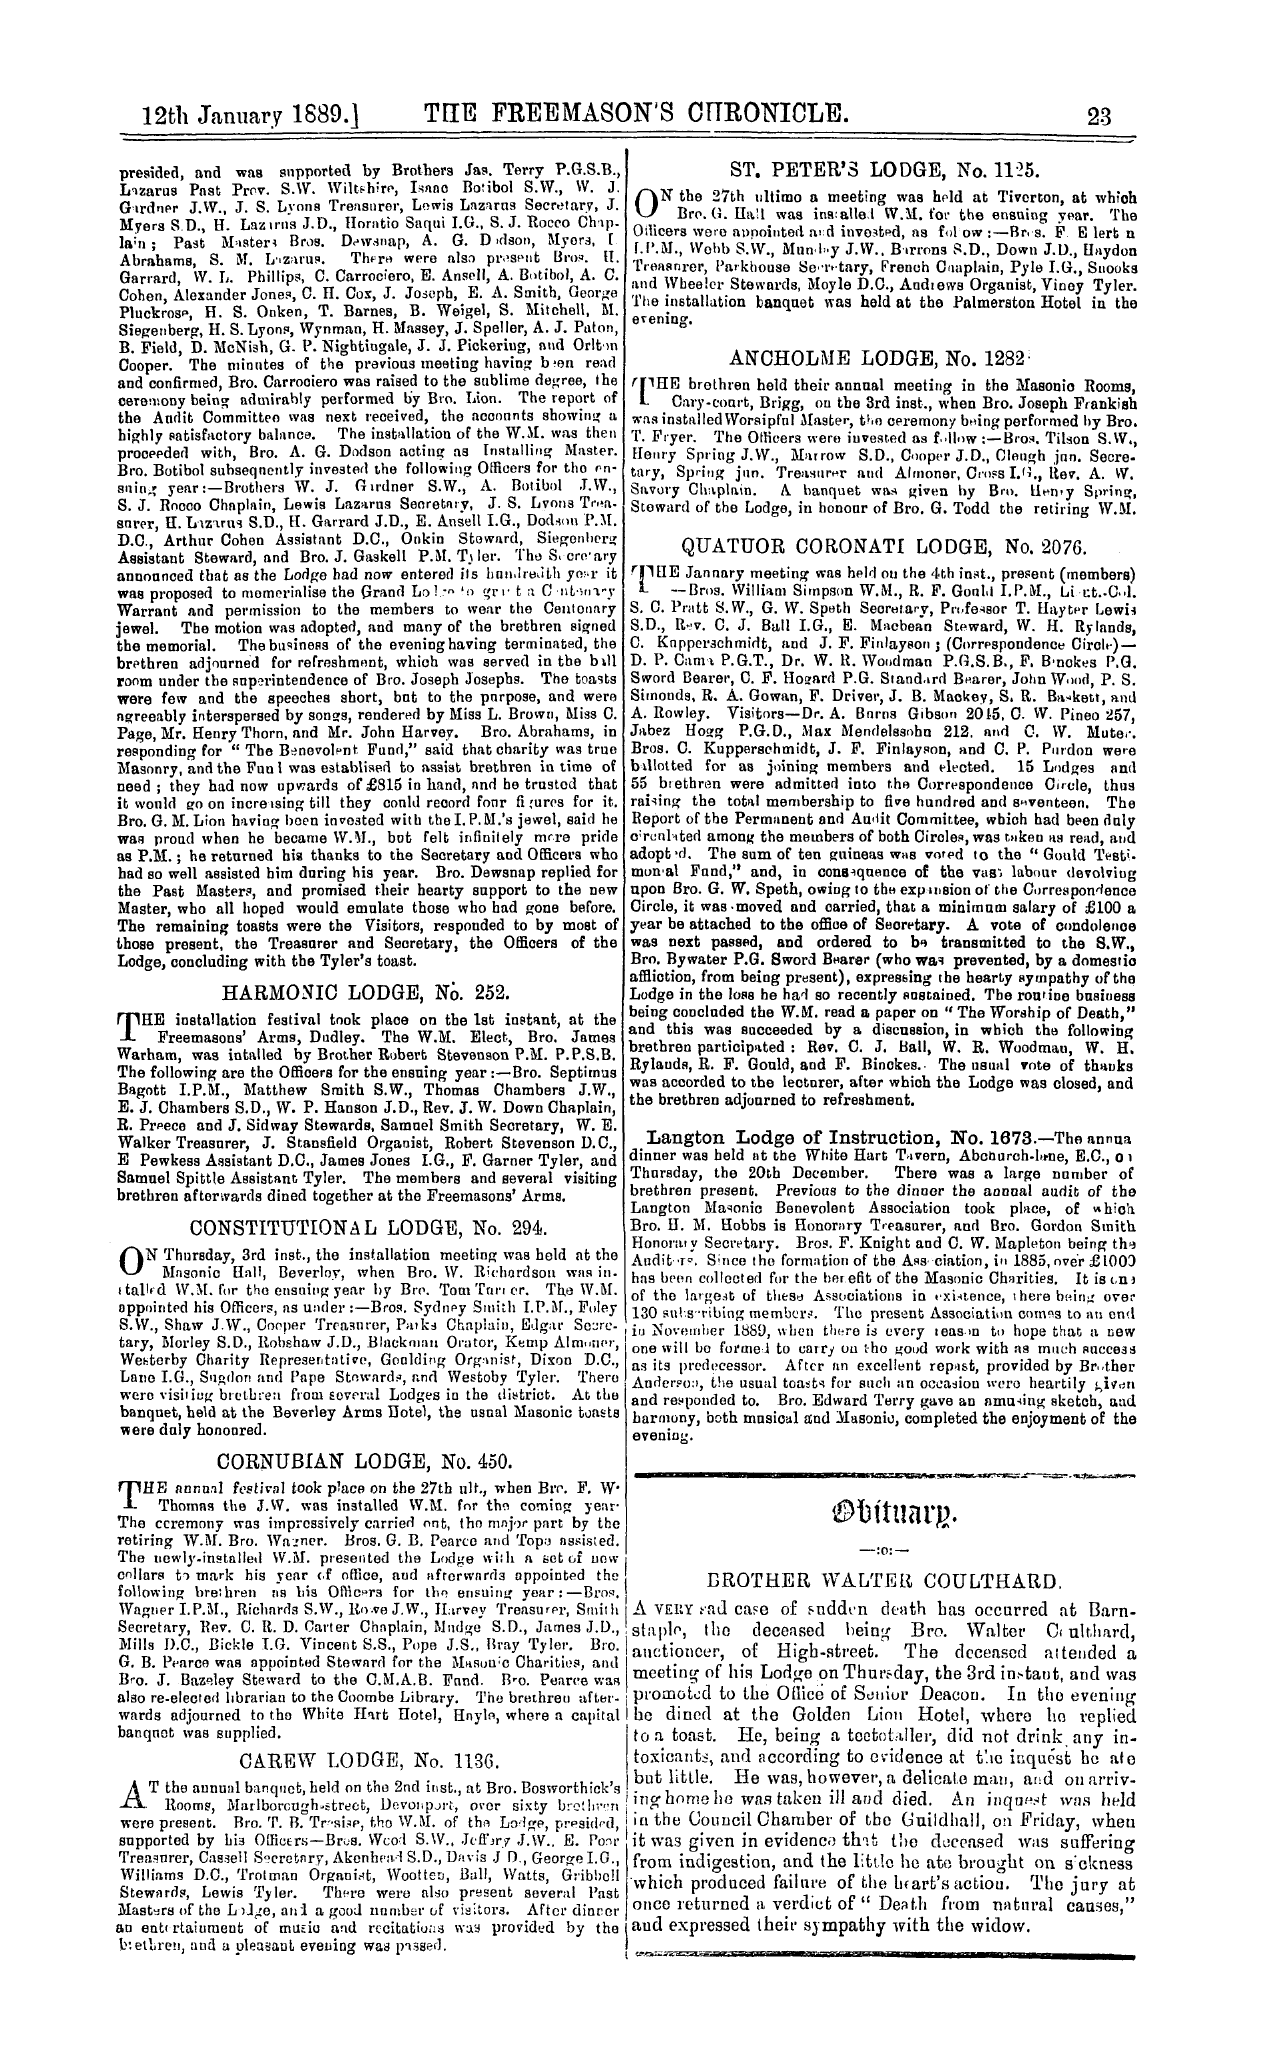 The Freemason's Chronicle: 1889-01-12 - Obituary.